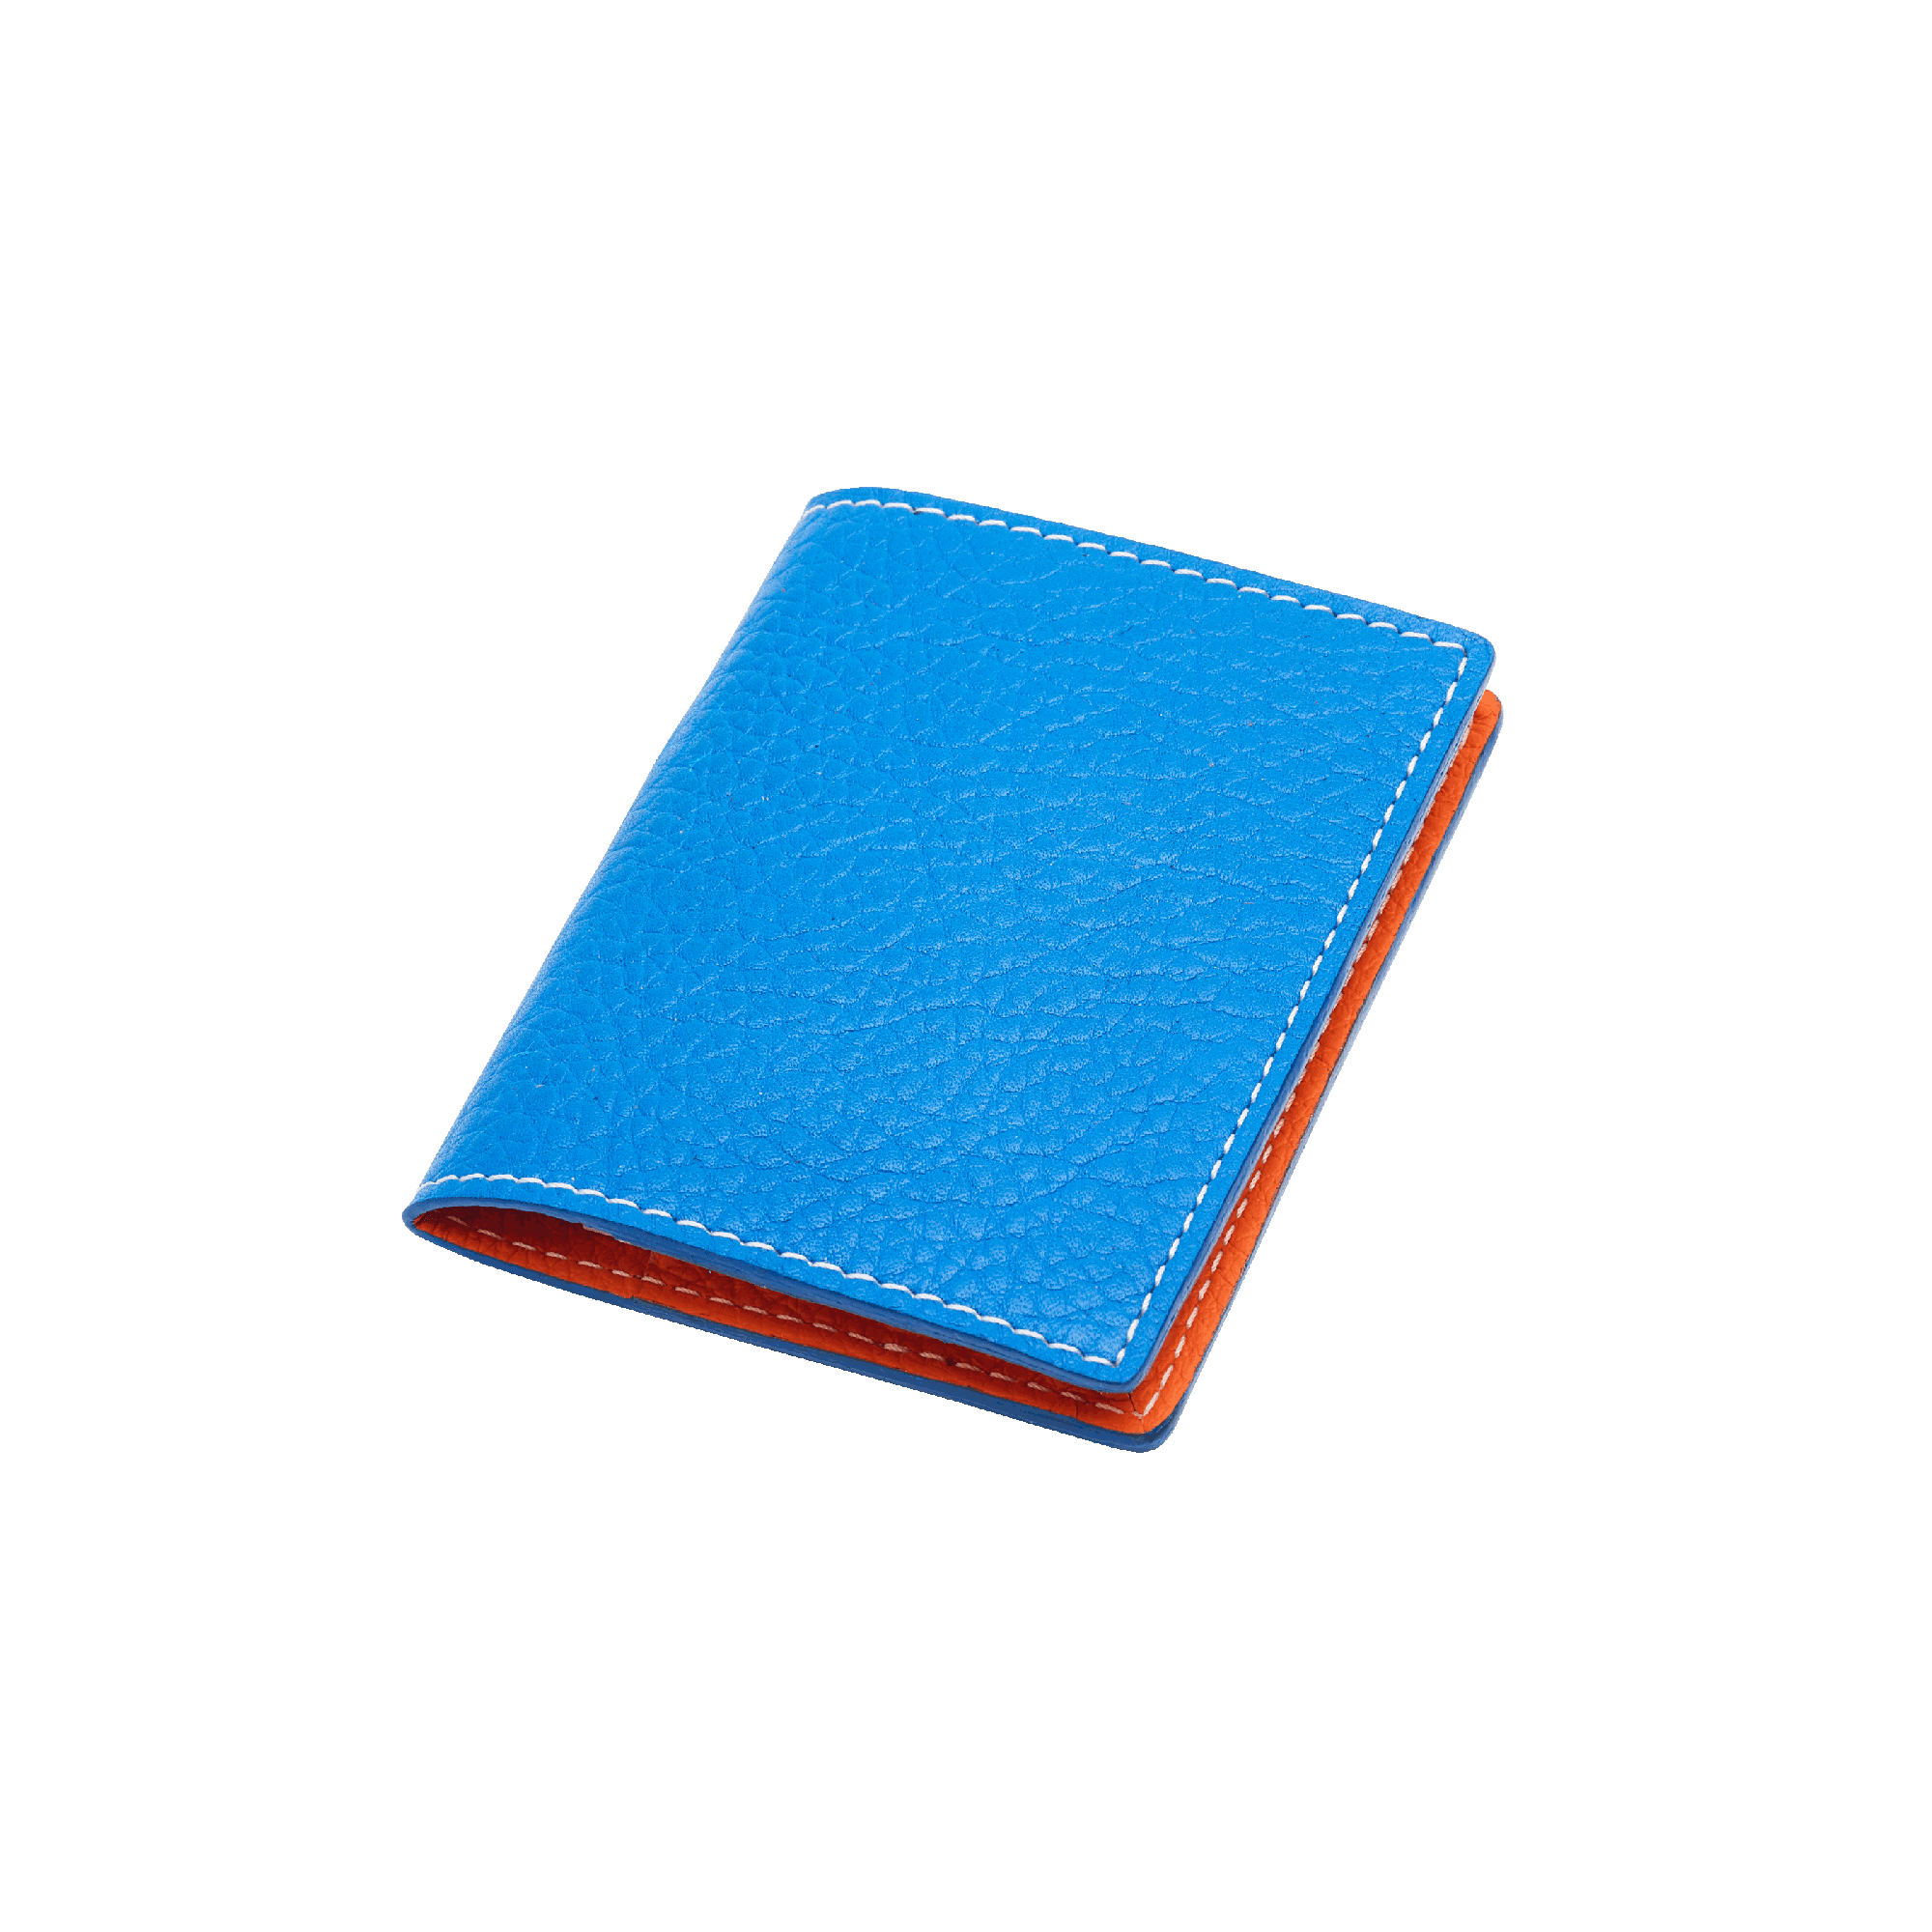 Volte face card holder - blue azur/orange